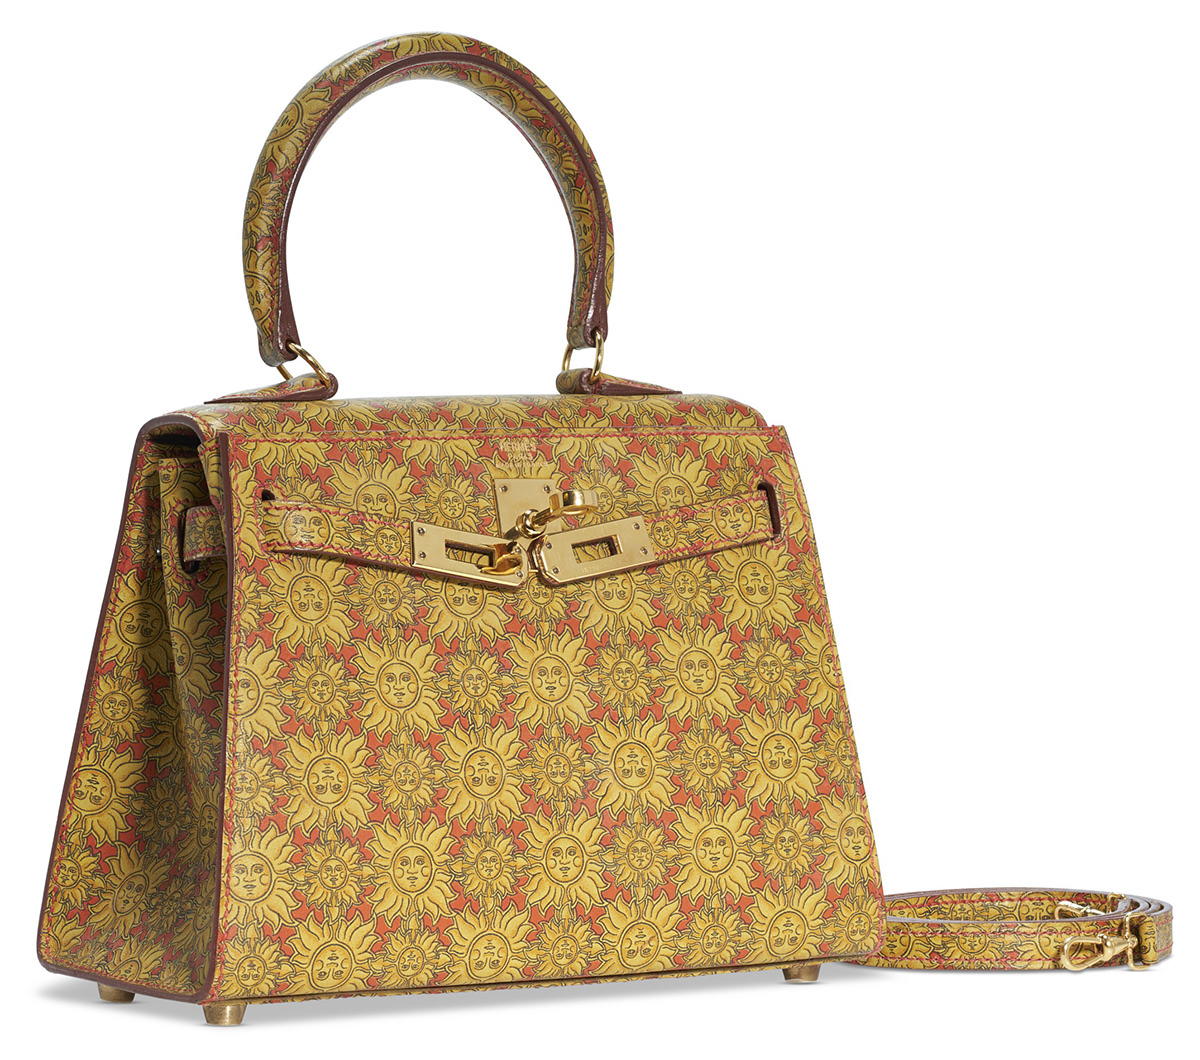 Hermes Birkin 35 cm handbag in etoupe togo leather